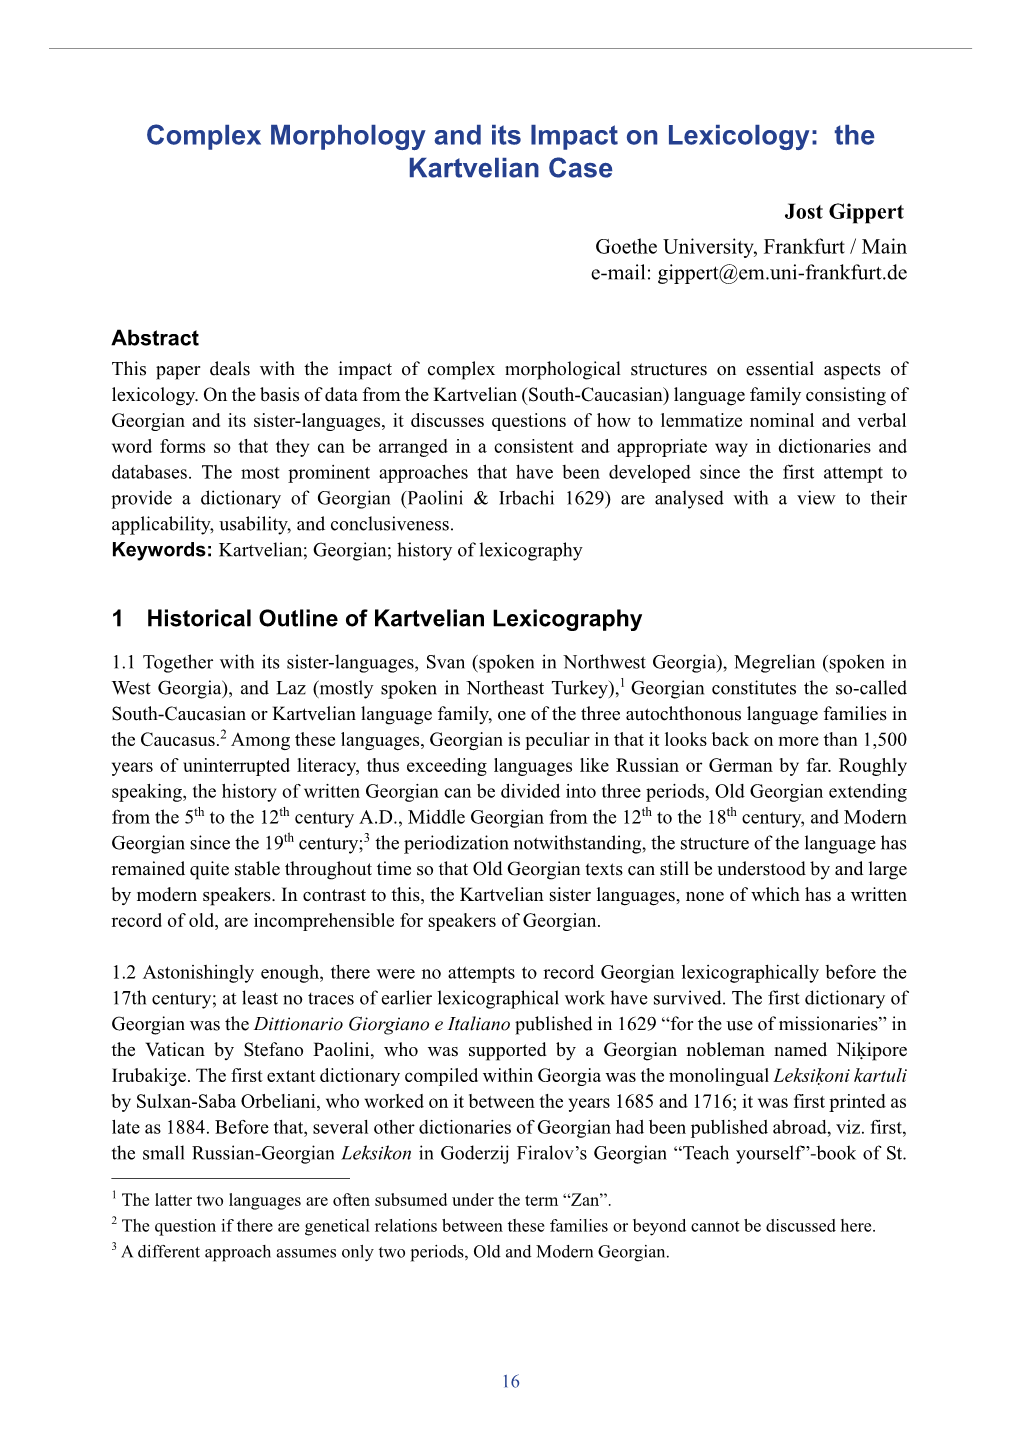 Complex Morphology and Its Impact on Lexicology: Complex Morphology and Its Impact on Lexicology: the Thekartvelian Kartvelian Case Case